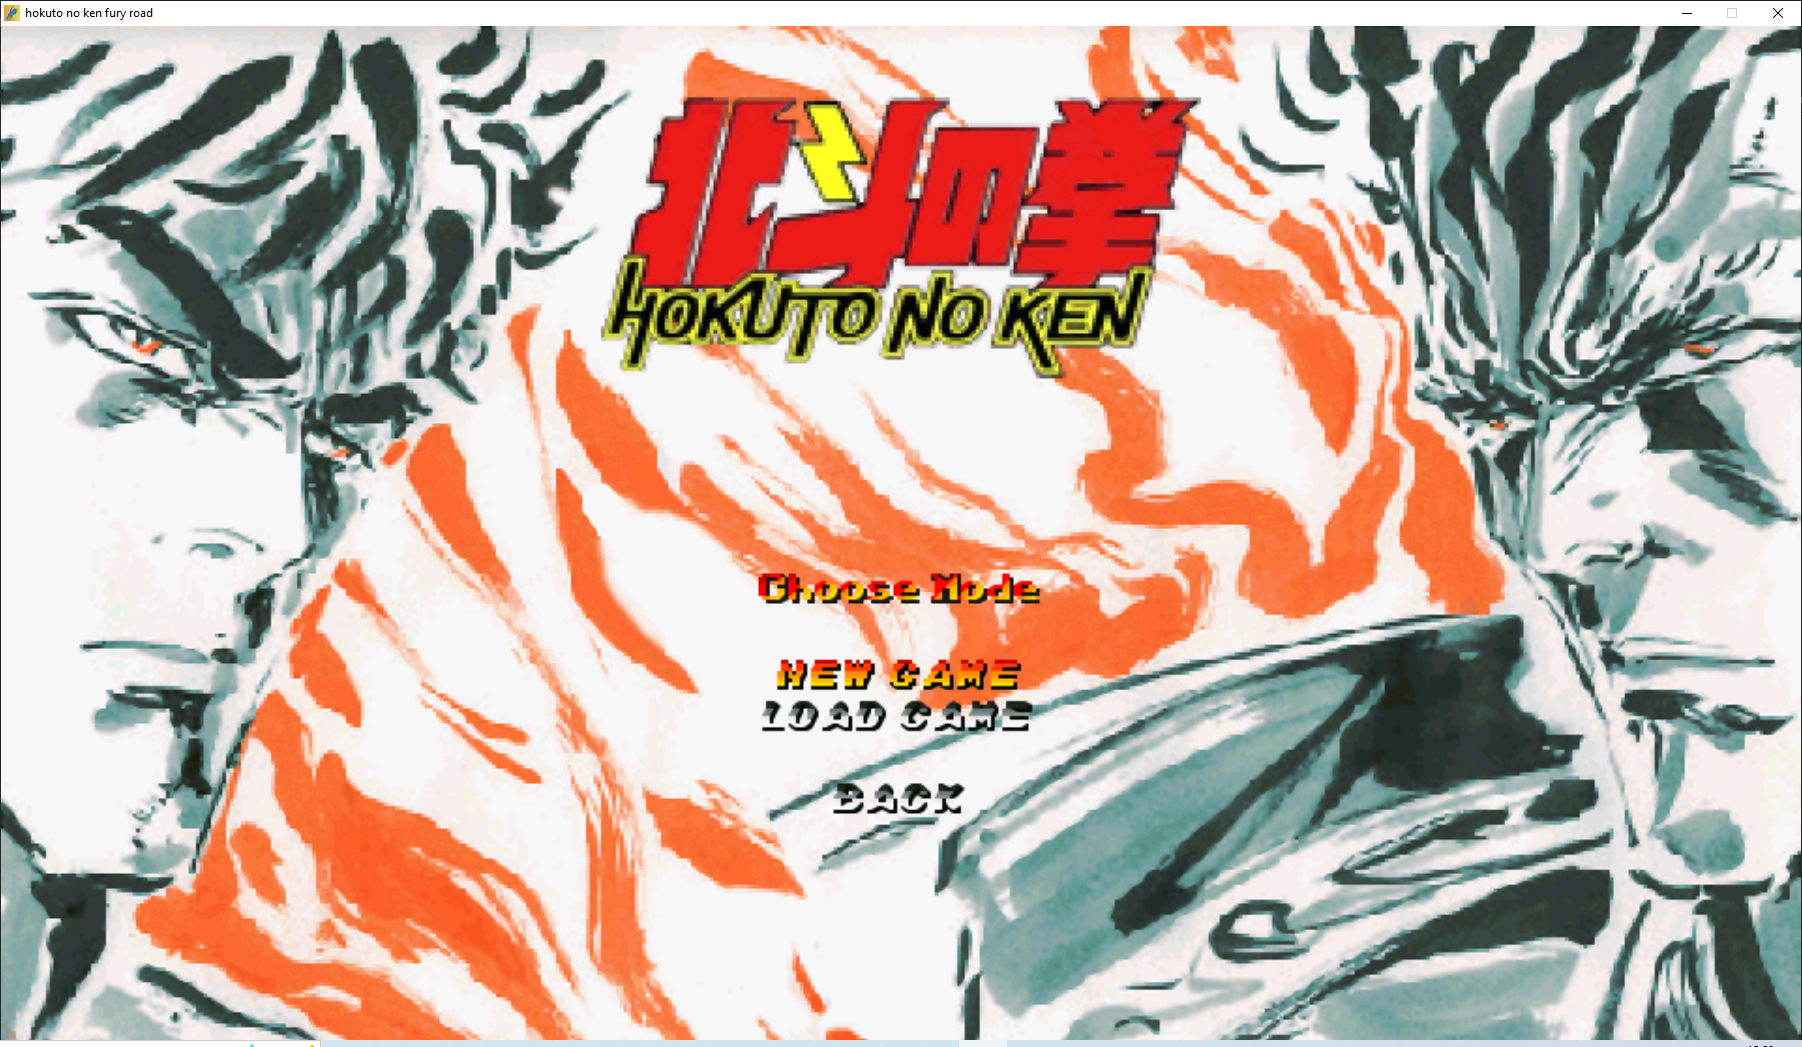 Hokuto no Ken Fury Road | OpenBoR